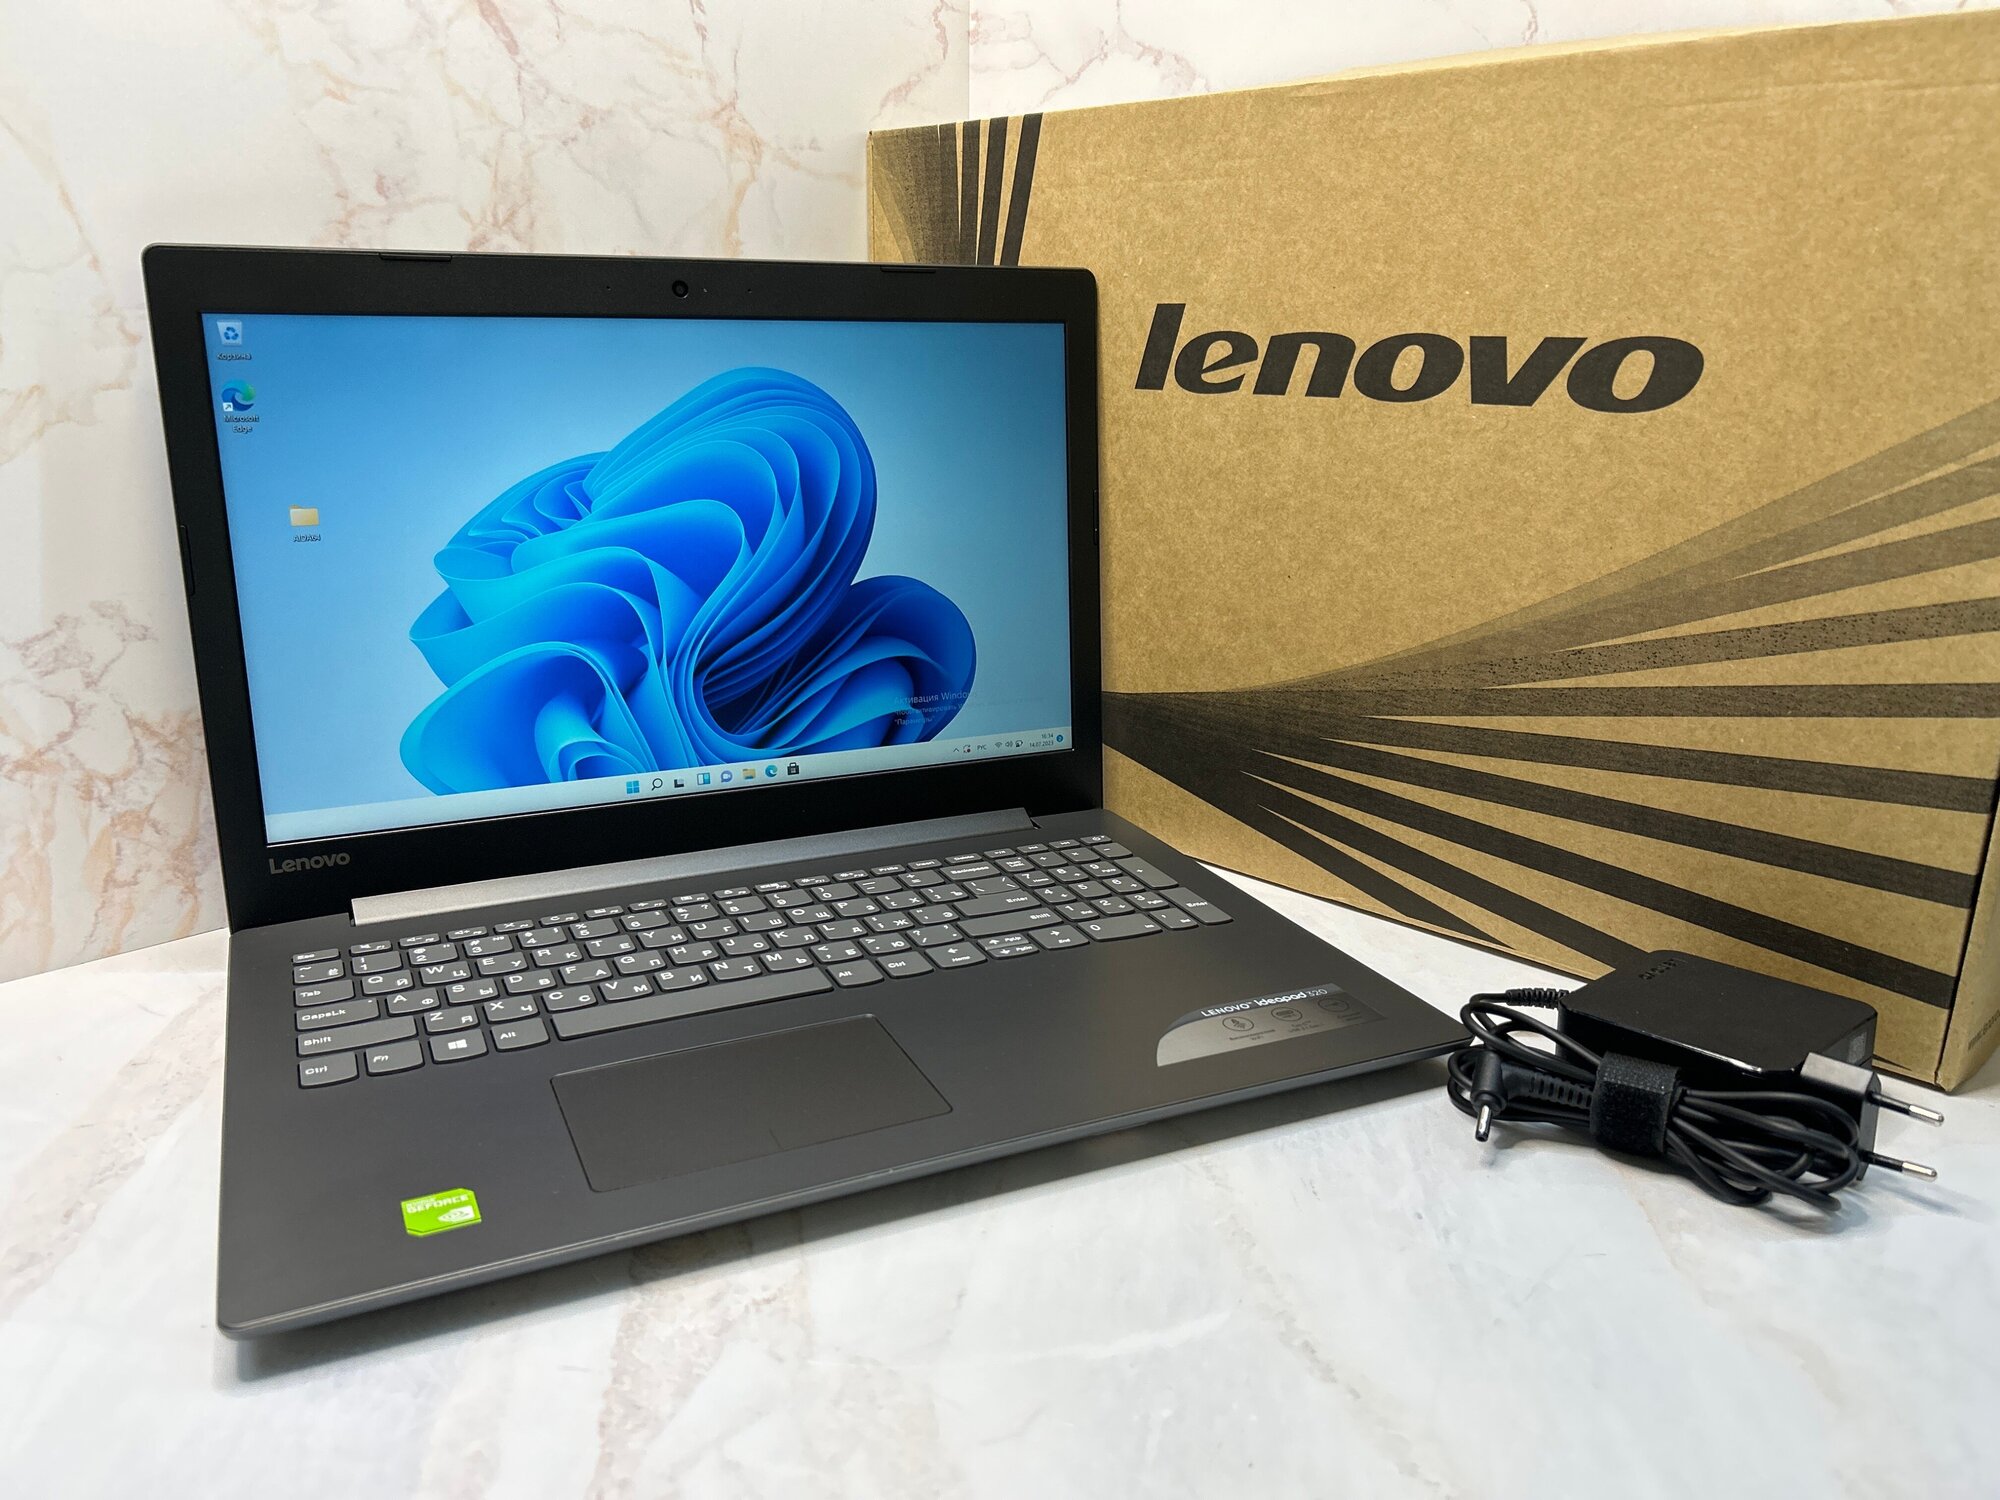 Ноутбук Lenovo 330-15IKB. Конфигурация: i5-8250U/8GB/1TB/GF MX150/DOS/FHD